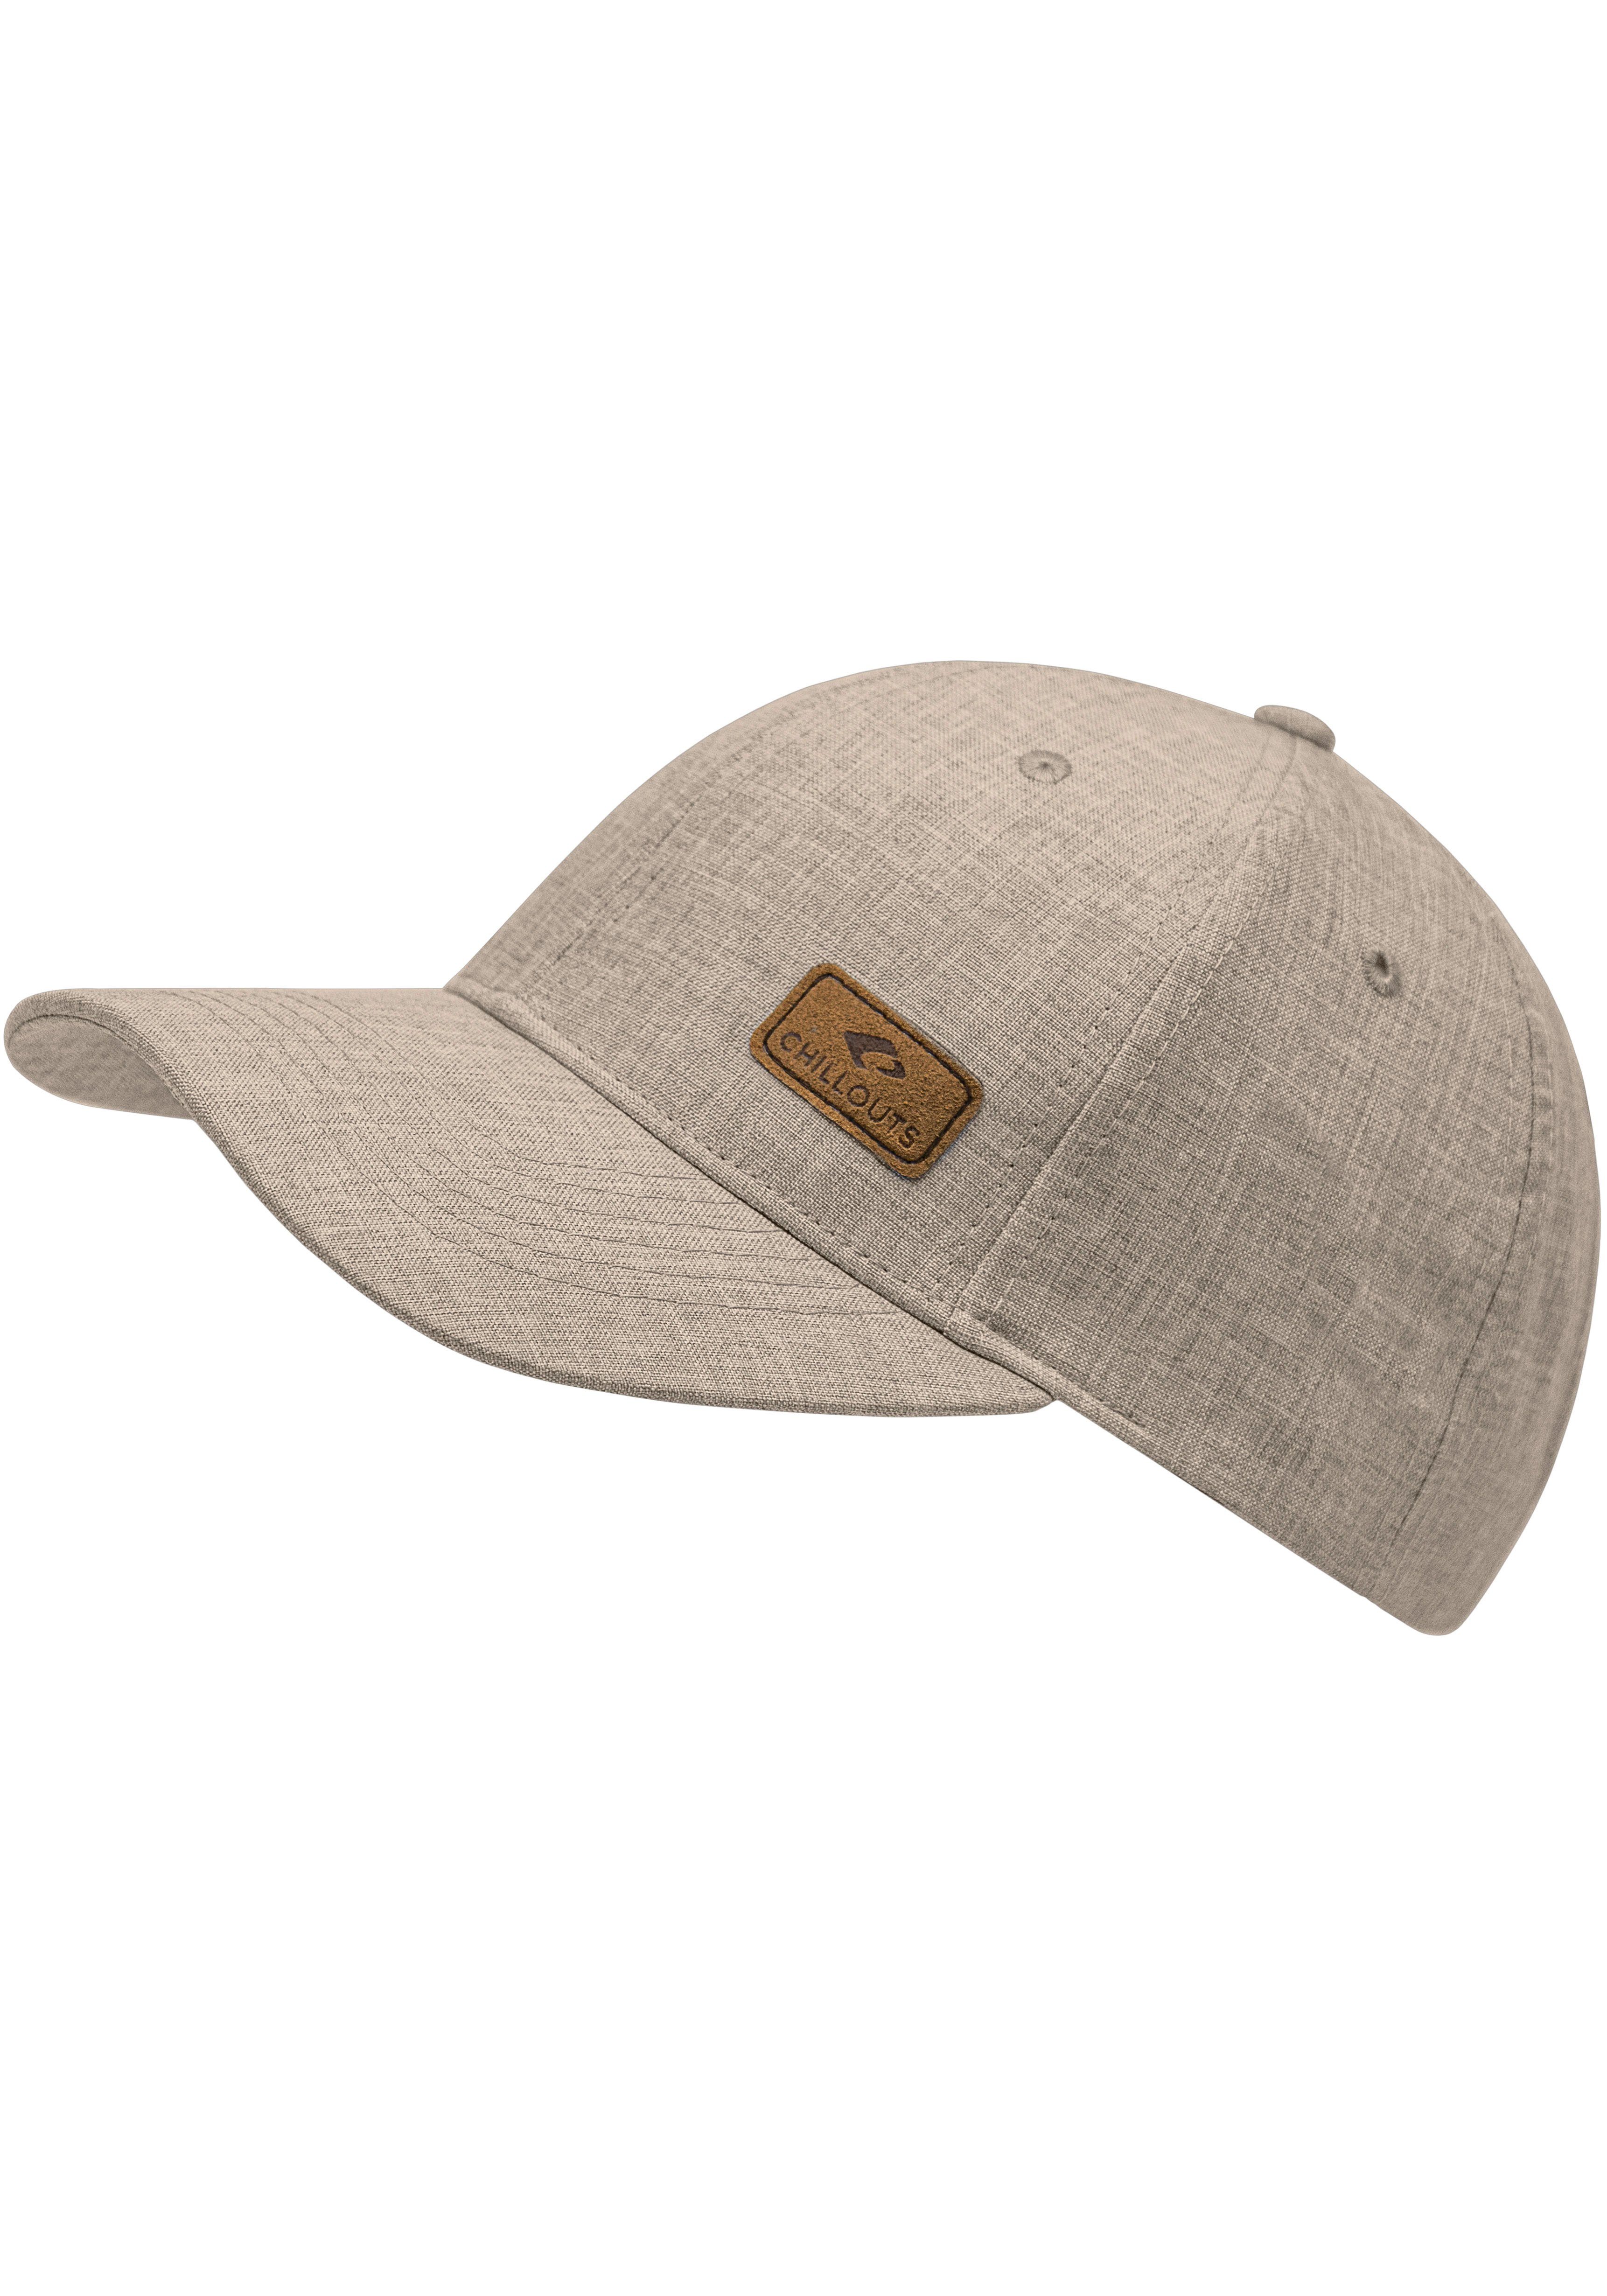 chillouts Baseball Cap Amadora Hat in melierter Optik, One Size, verstellbar beige